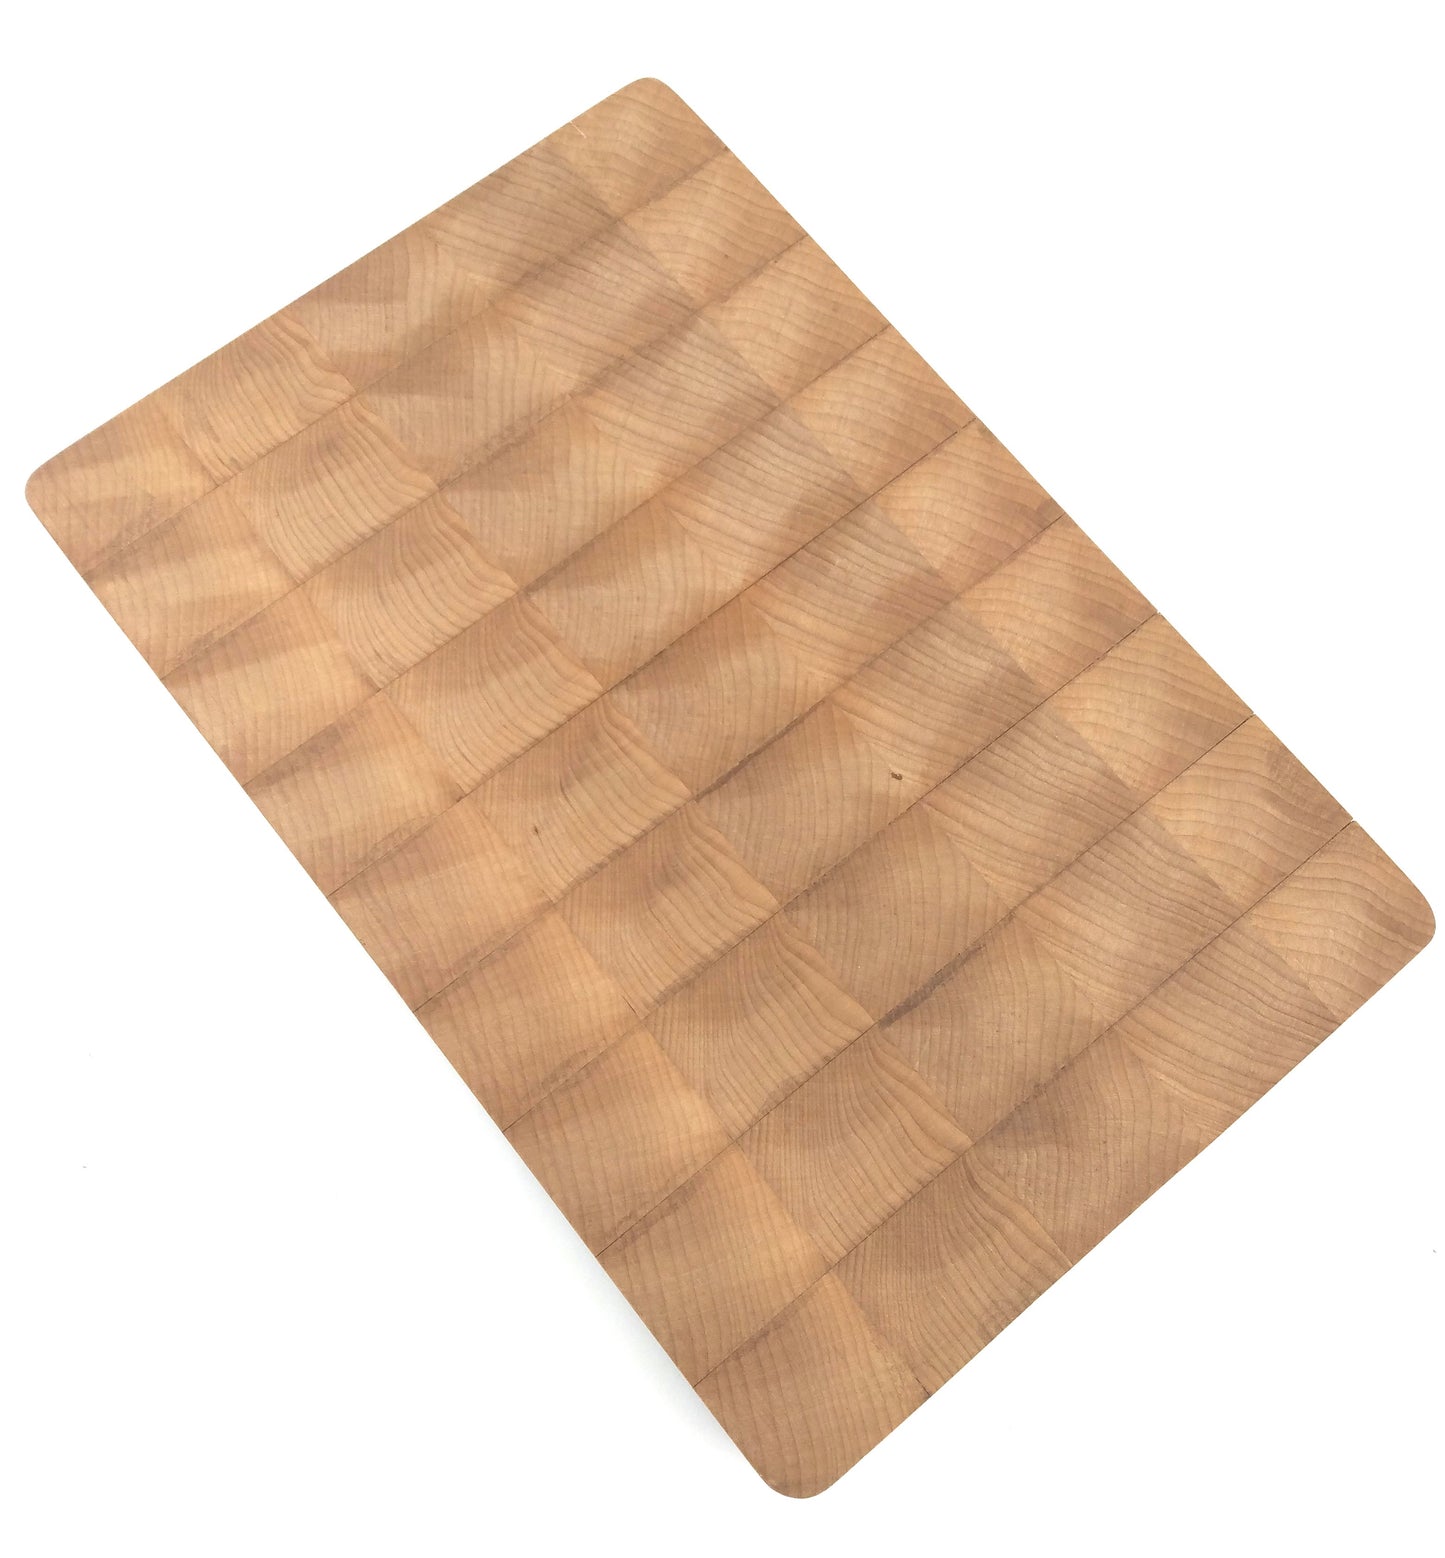 Maple Endgrain Cutting Board